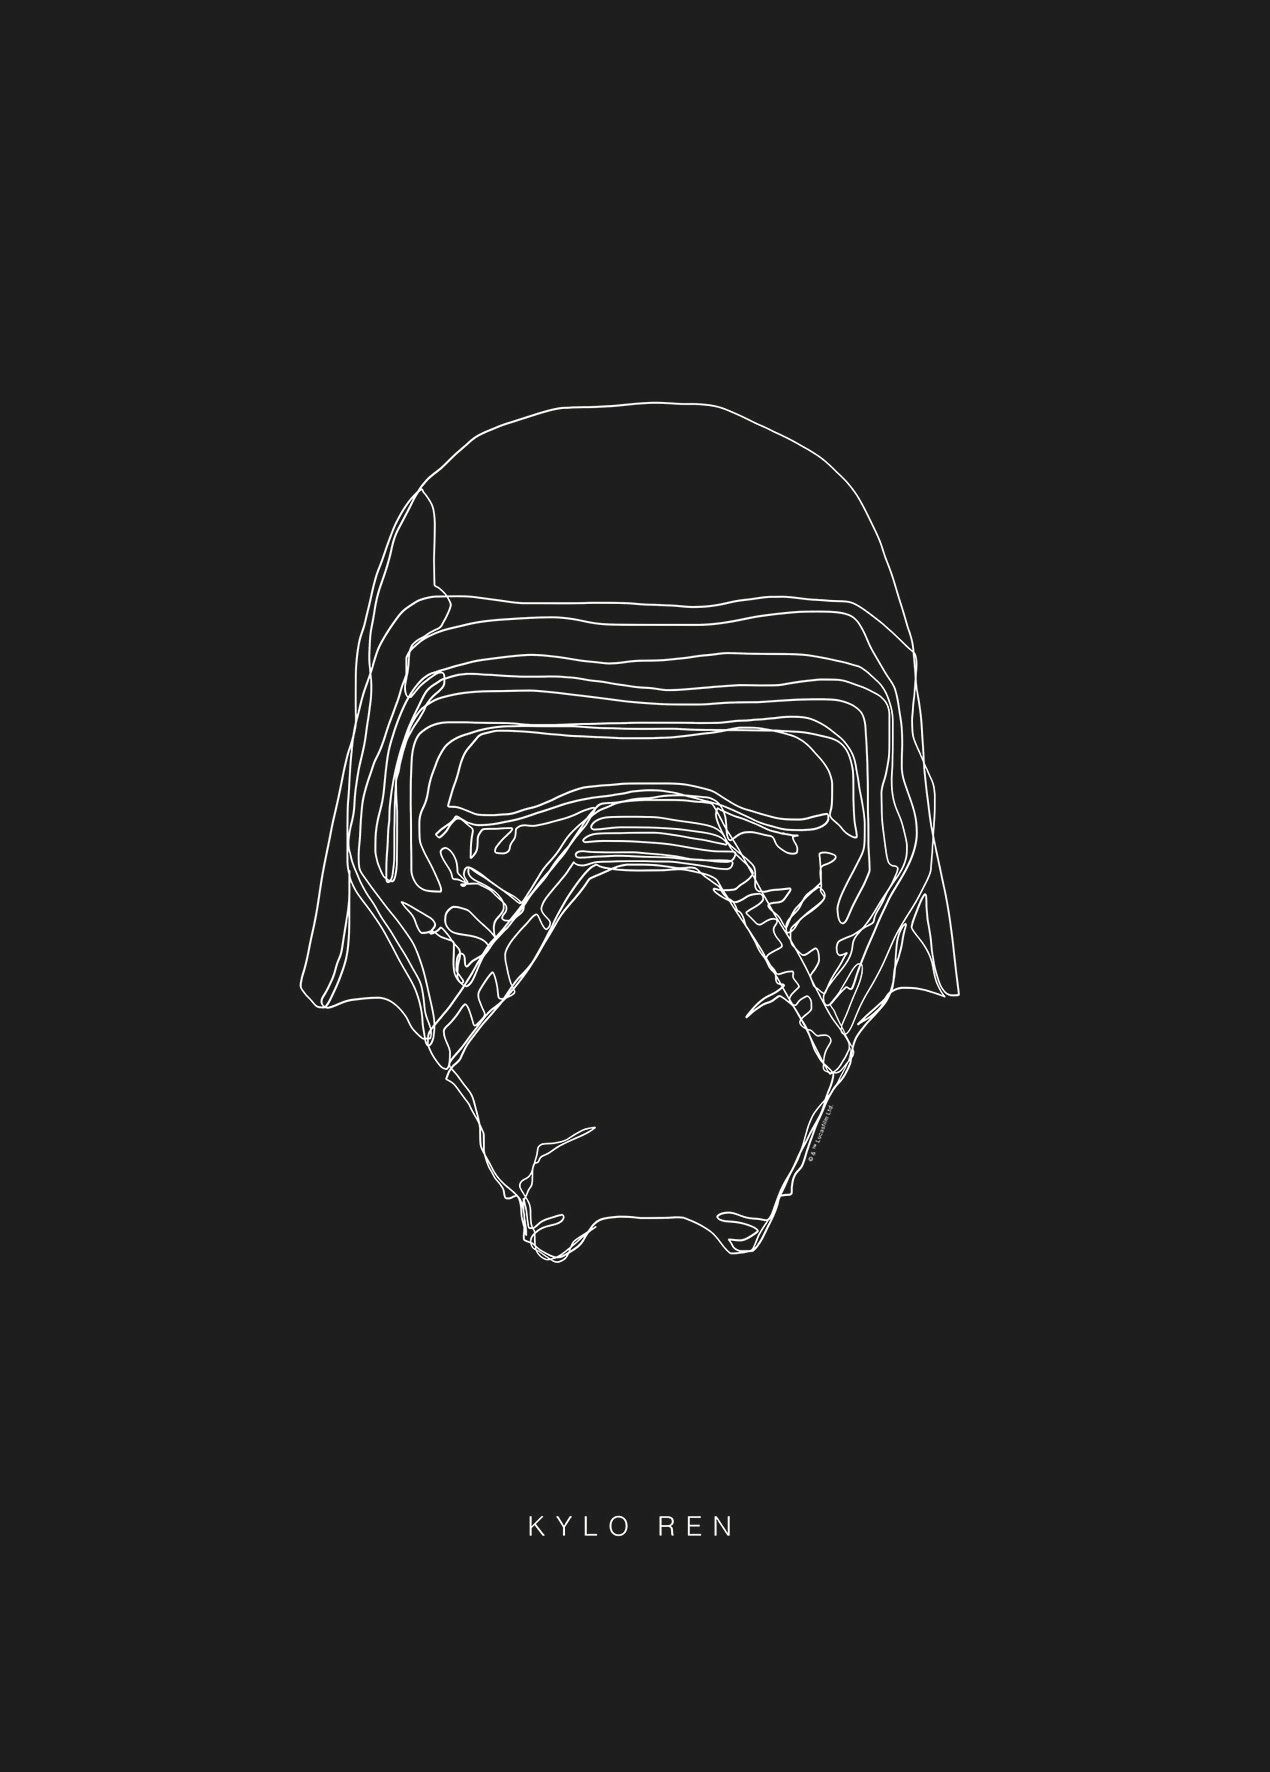 Komar Poster Star Wars Lines dark Side Kylo